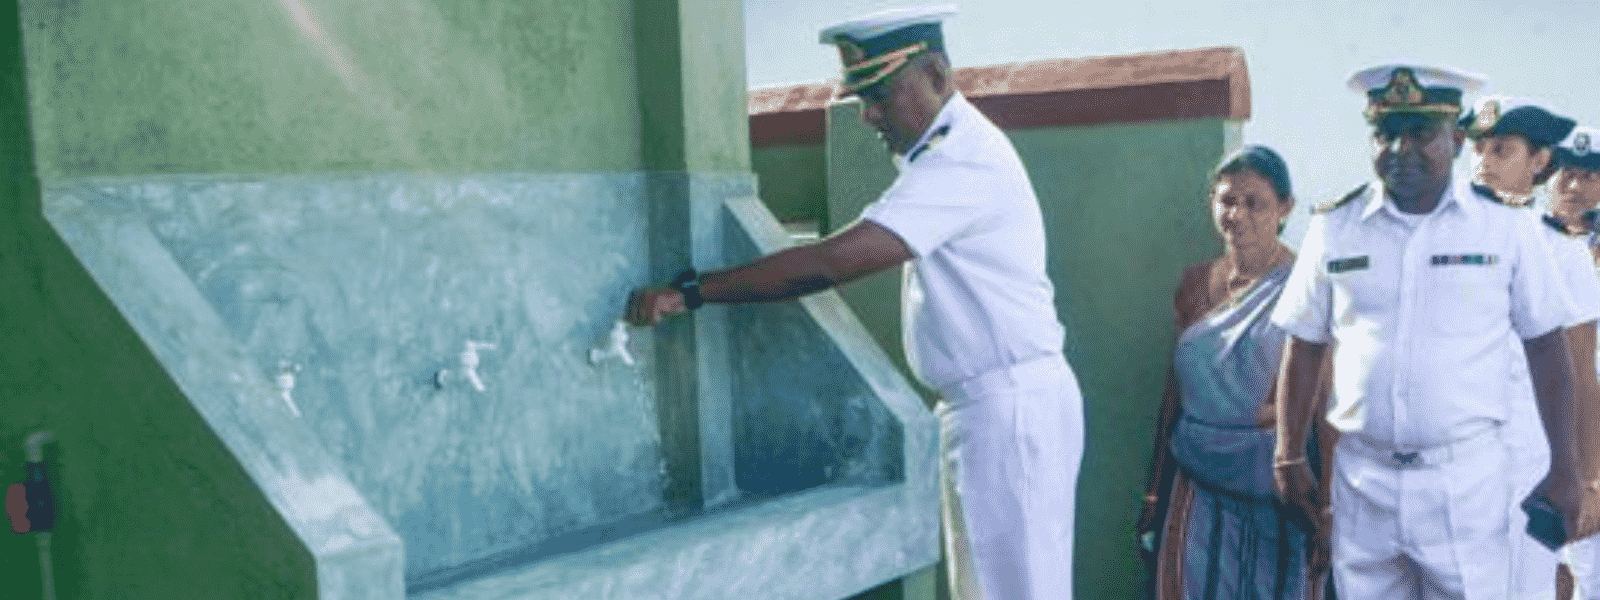 Navy Upgrades Sanitation at Medawachchiya Schools